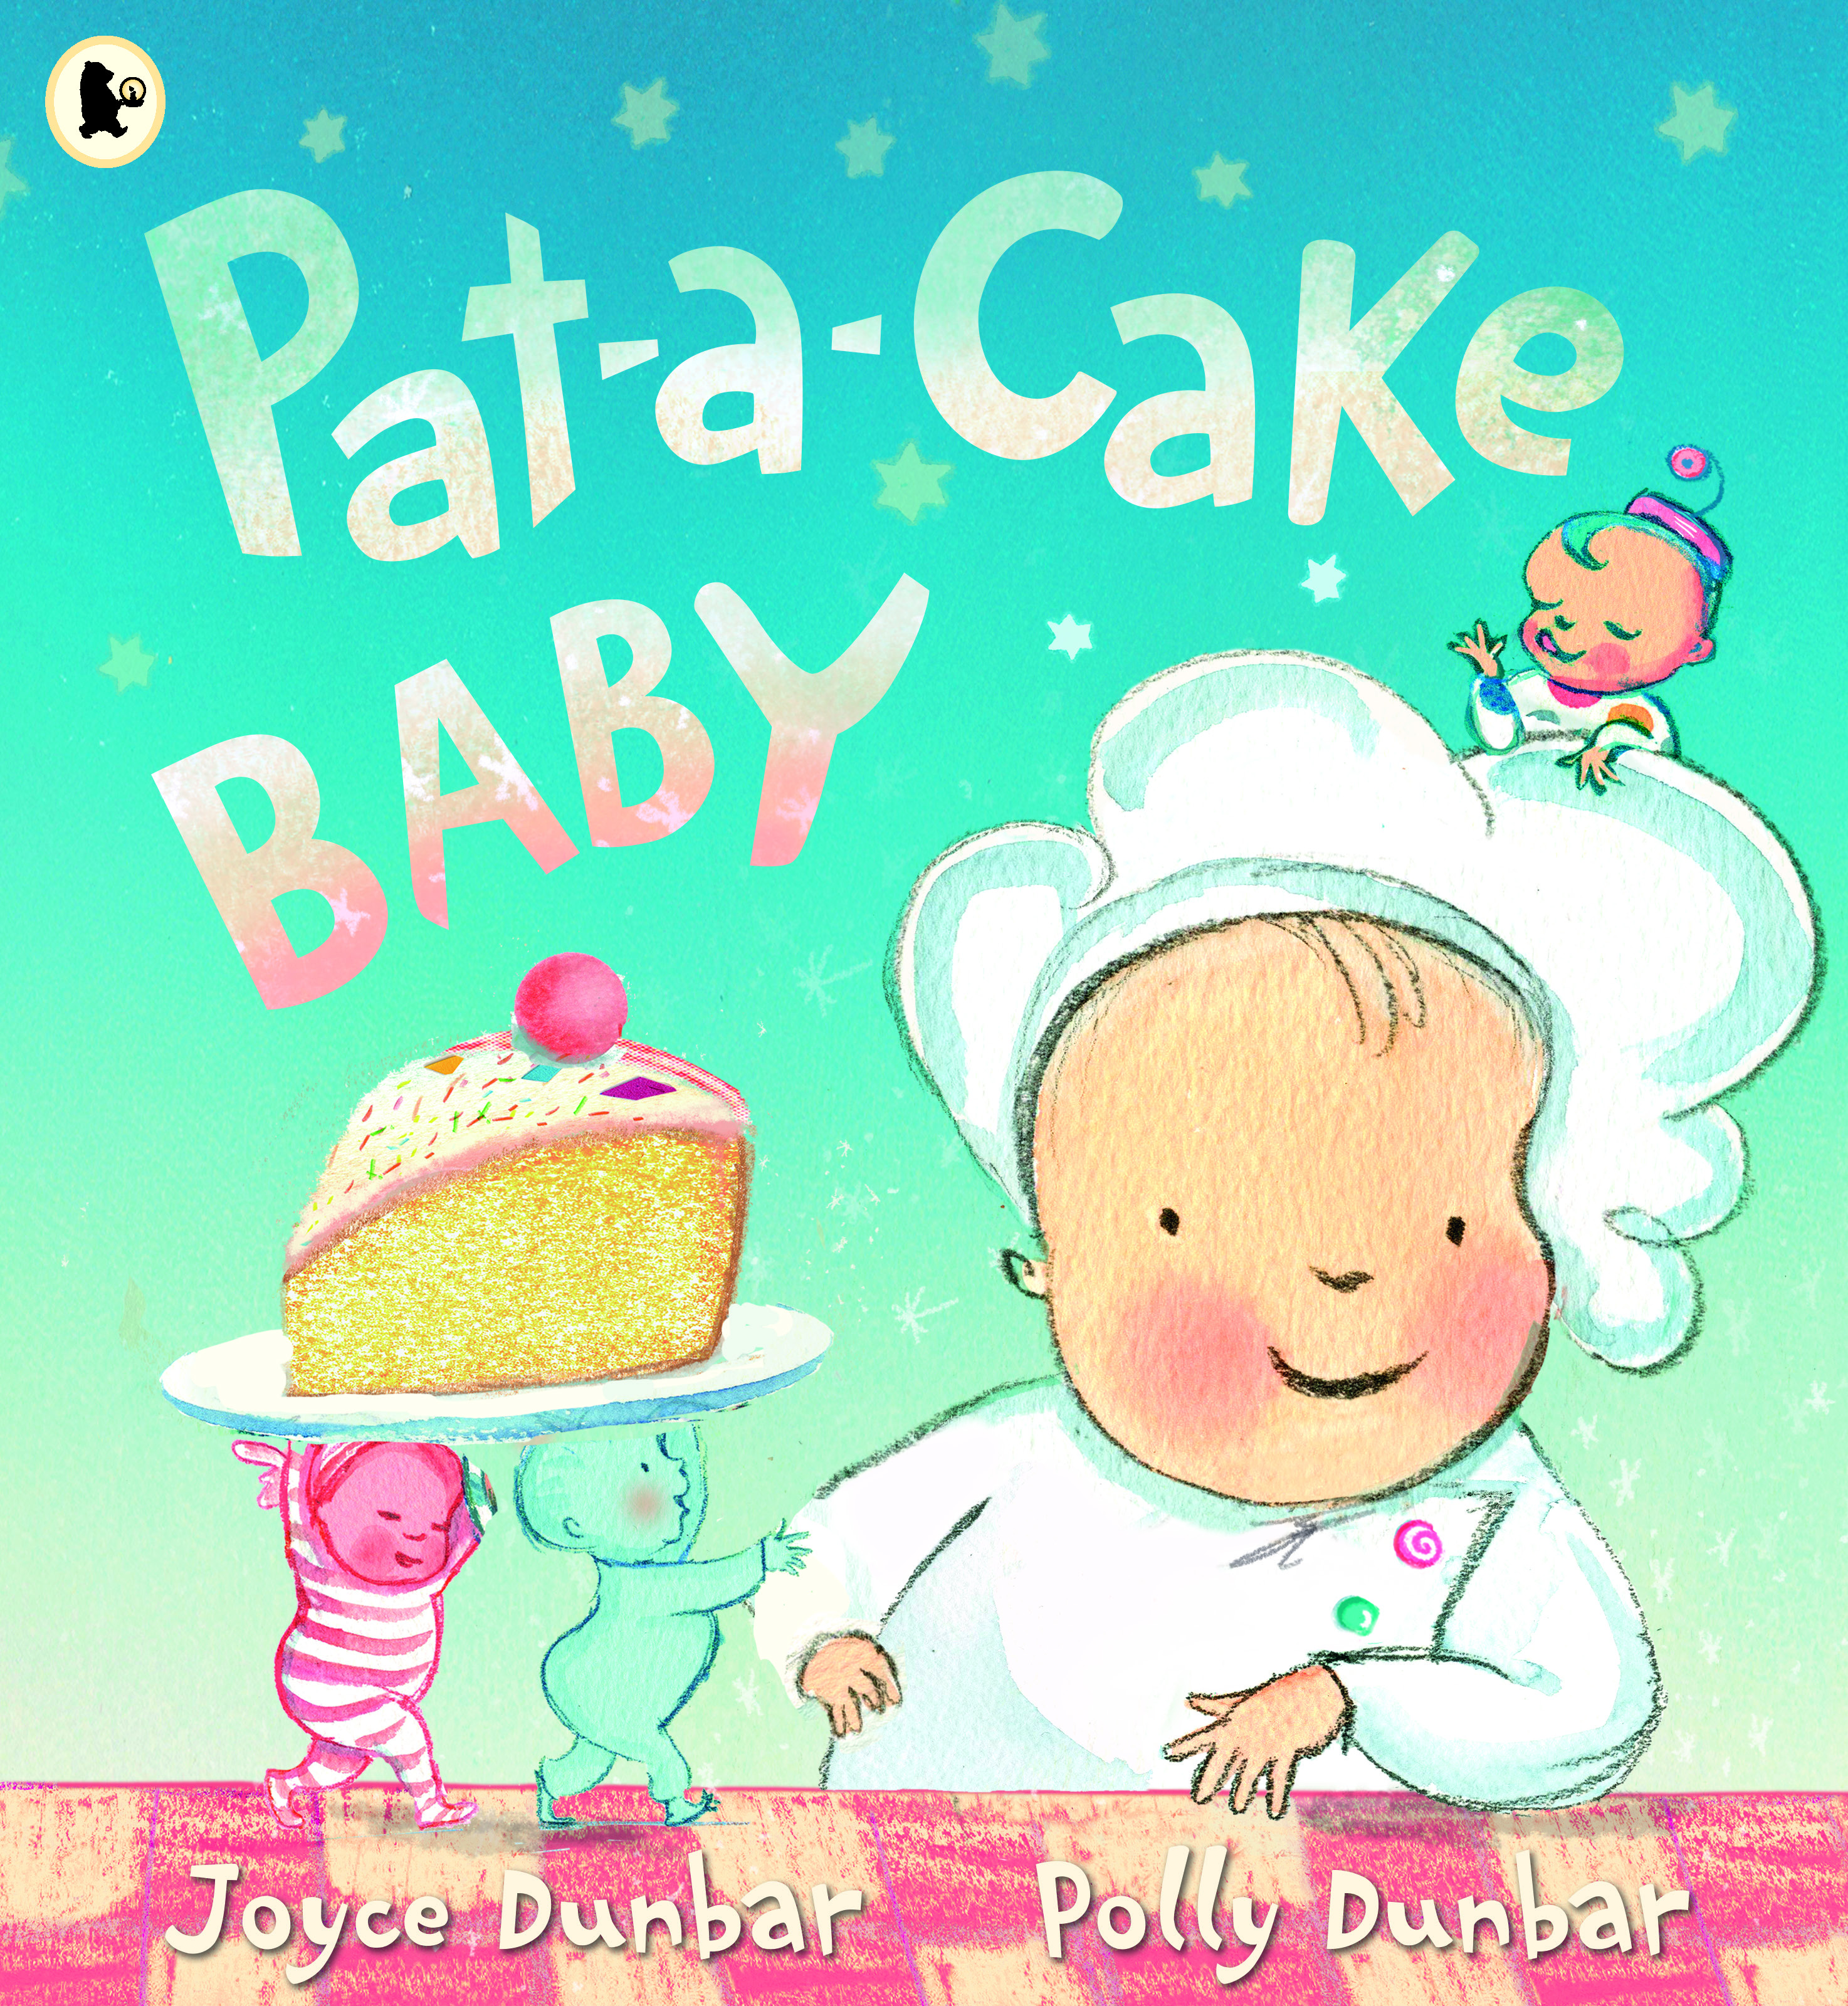 Pat-a-Cake-Baby